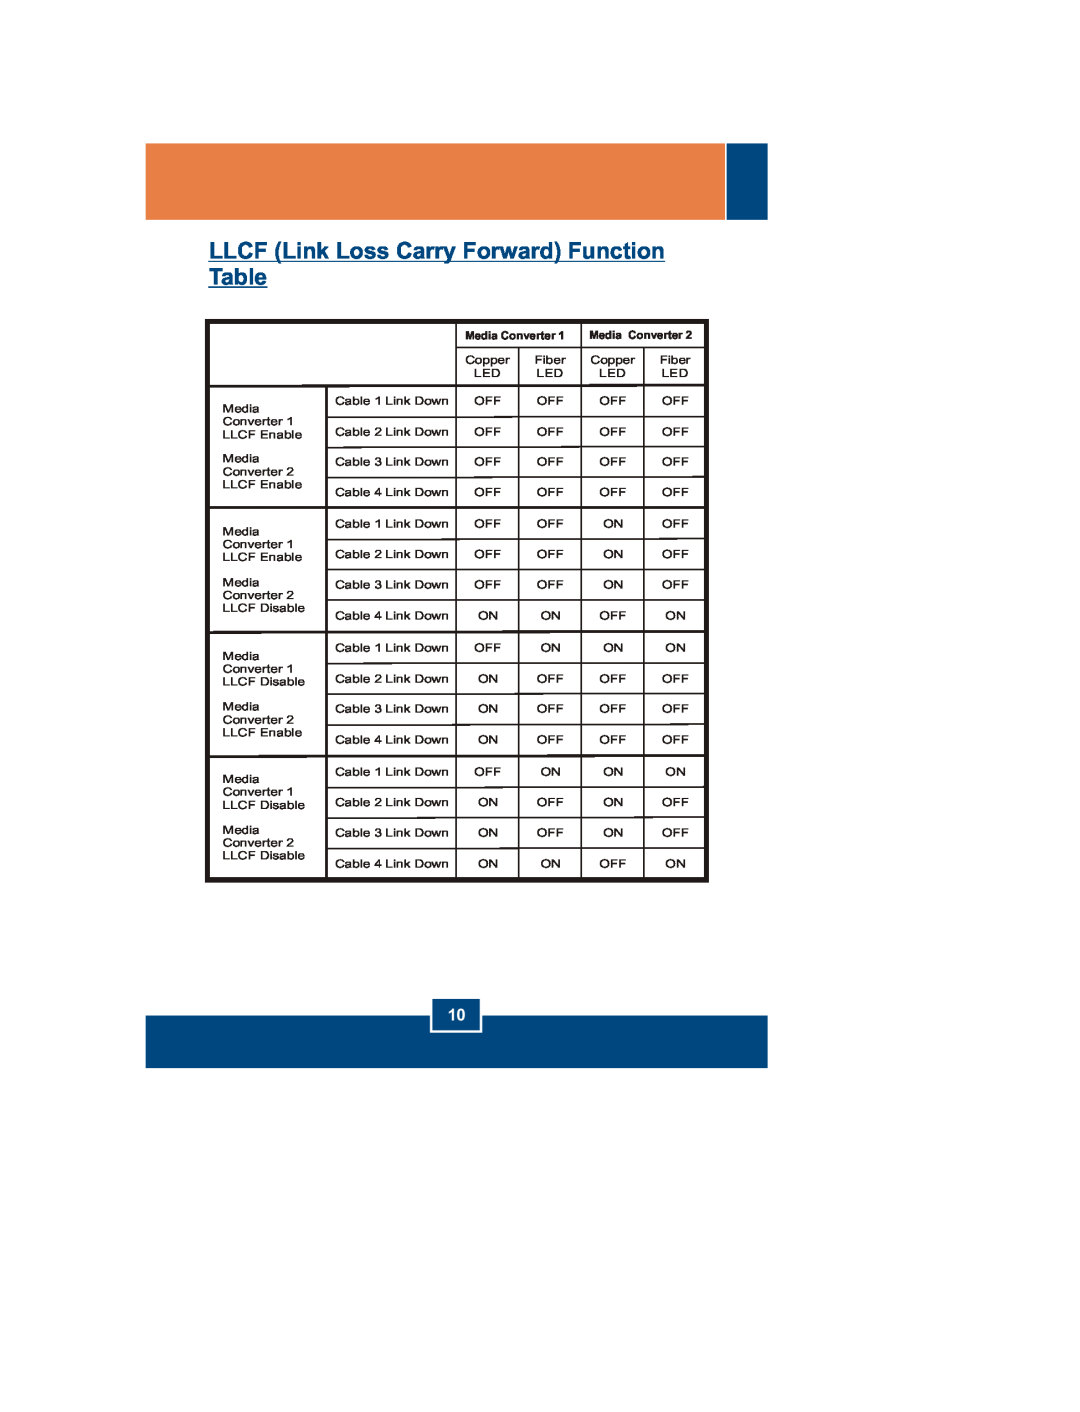 TRENDnet TFC-1000, TFC-2000 SERIES, TFC-210 SERIES manual LLCF Link Loss Carry Forward Function Table, Media Converter 